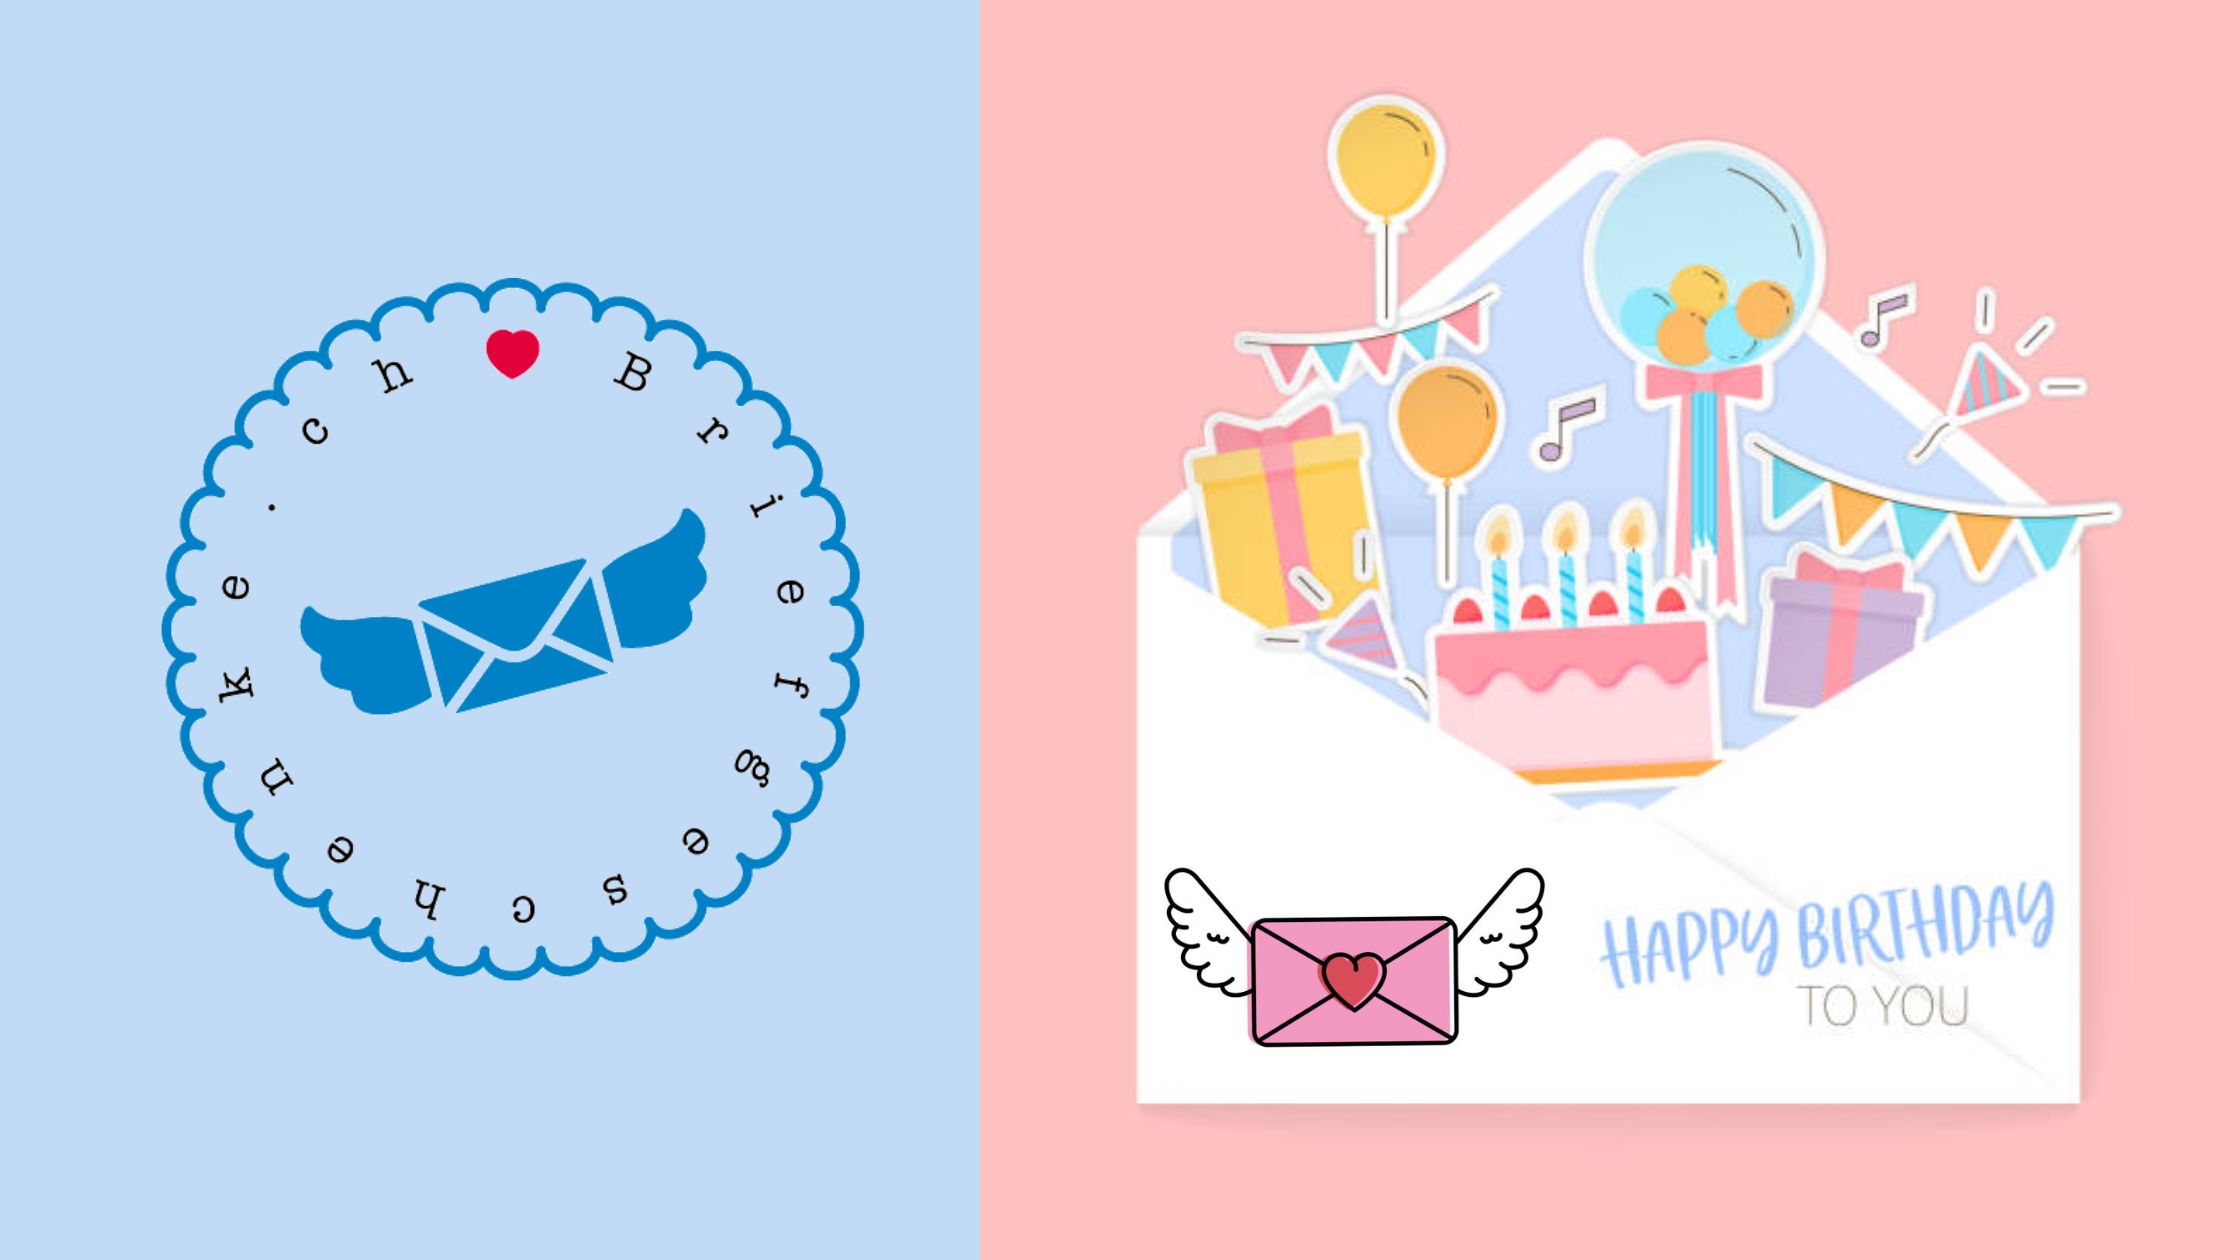 Send a birthday surprise